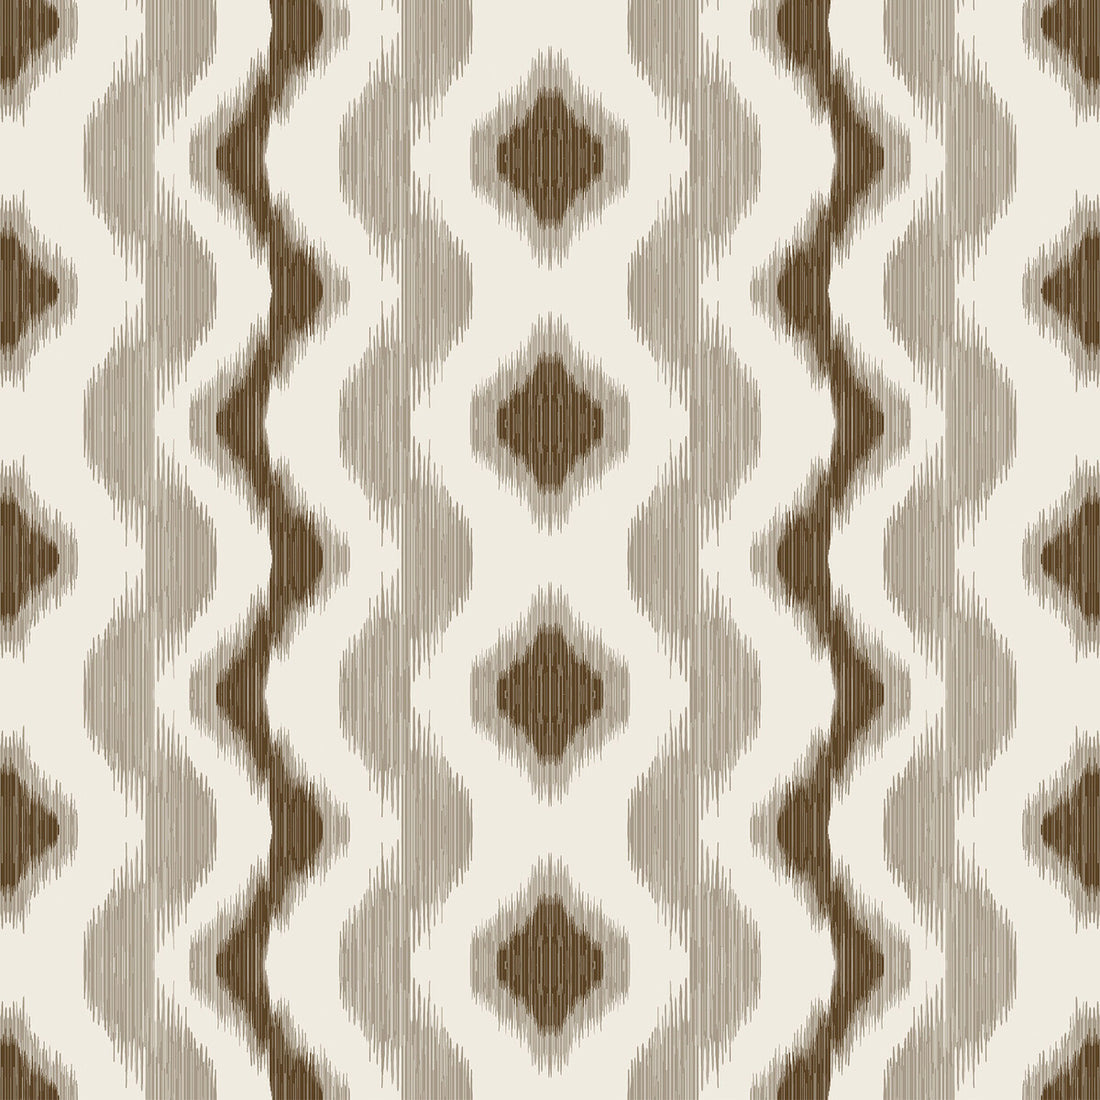 Cala Ferrera fabric in topo color - pattern GDT5683.002.0 - by Gaston y Daniela in the Gaston Maiorica collection